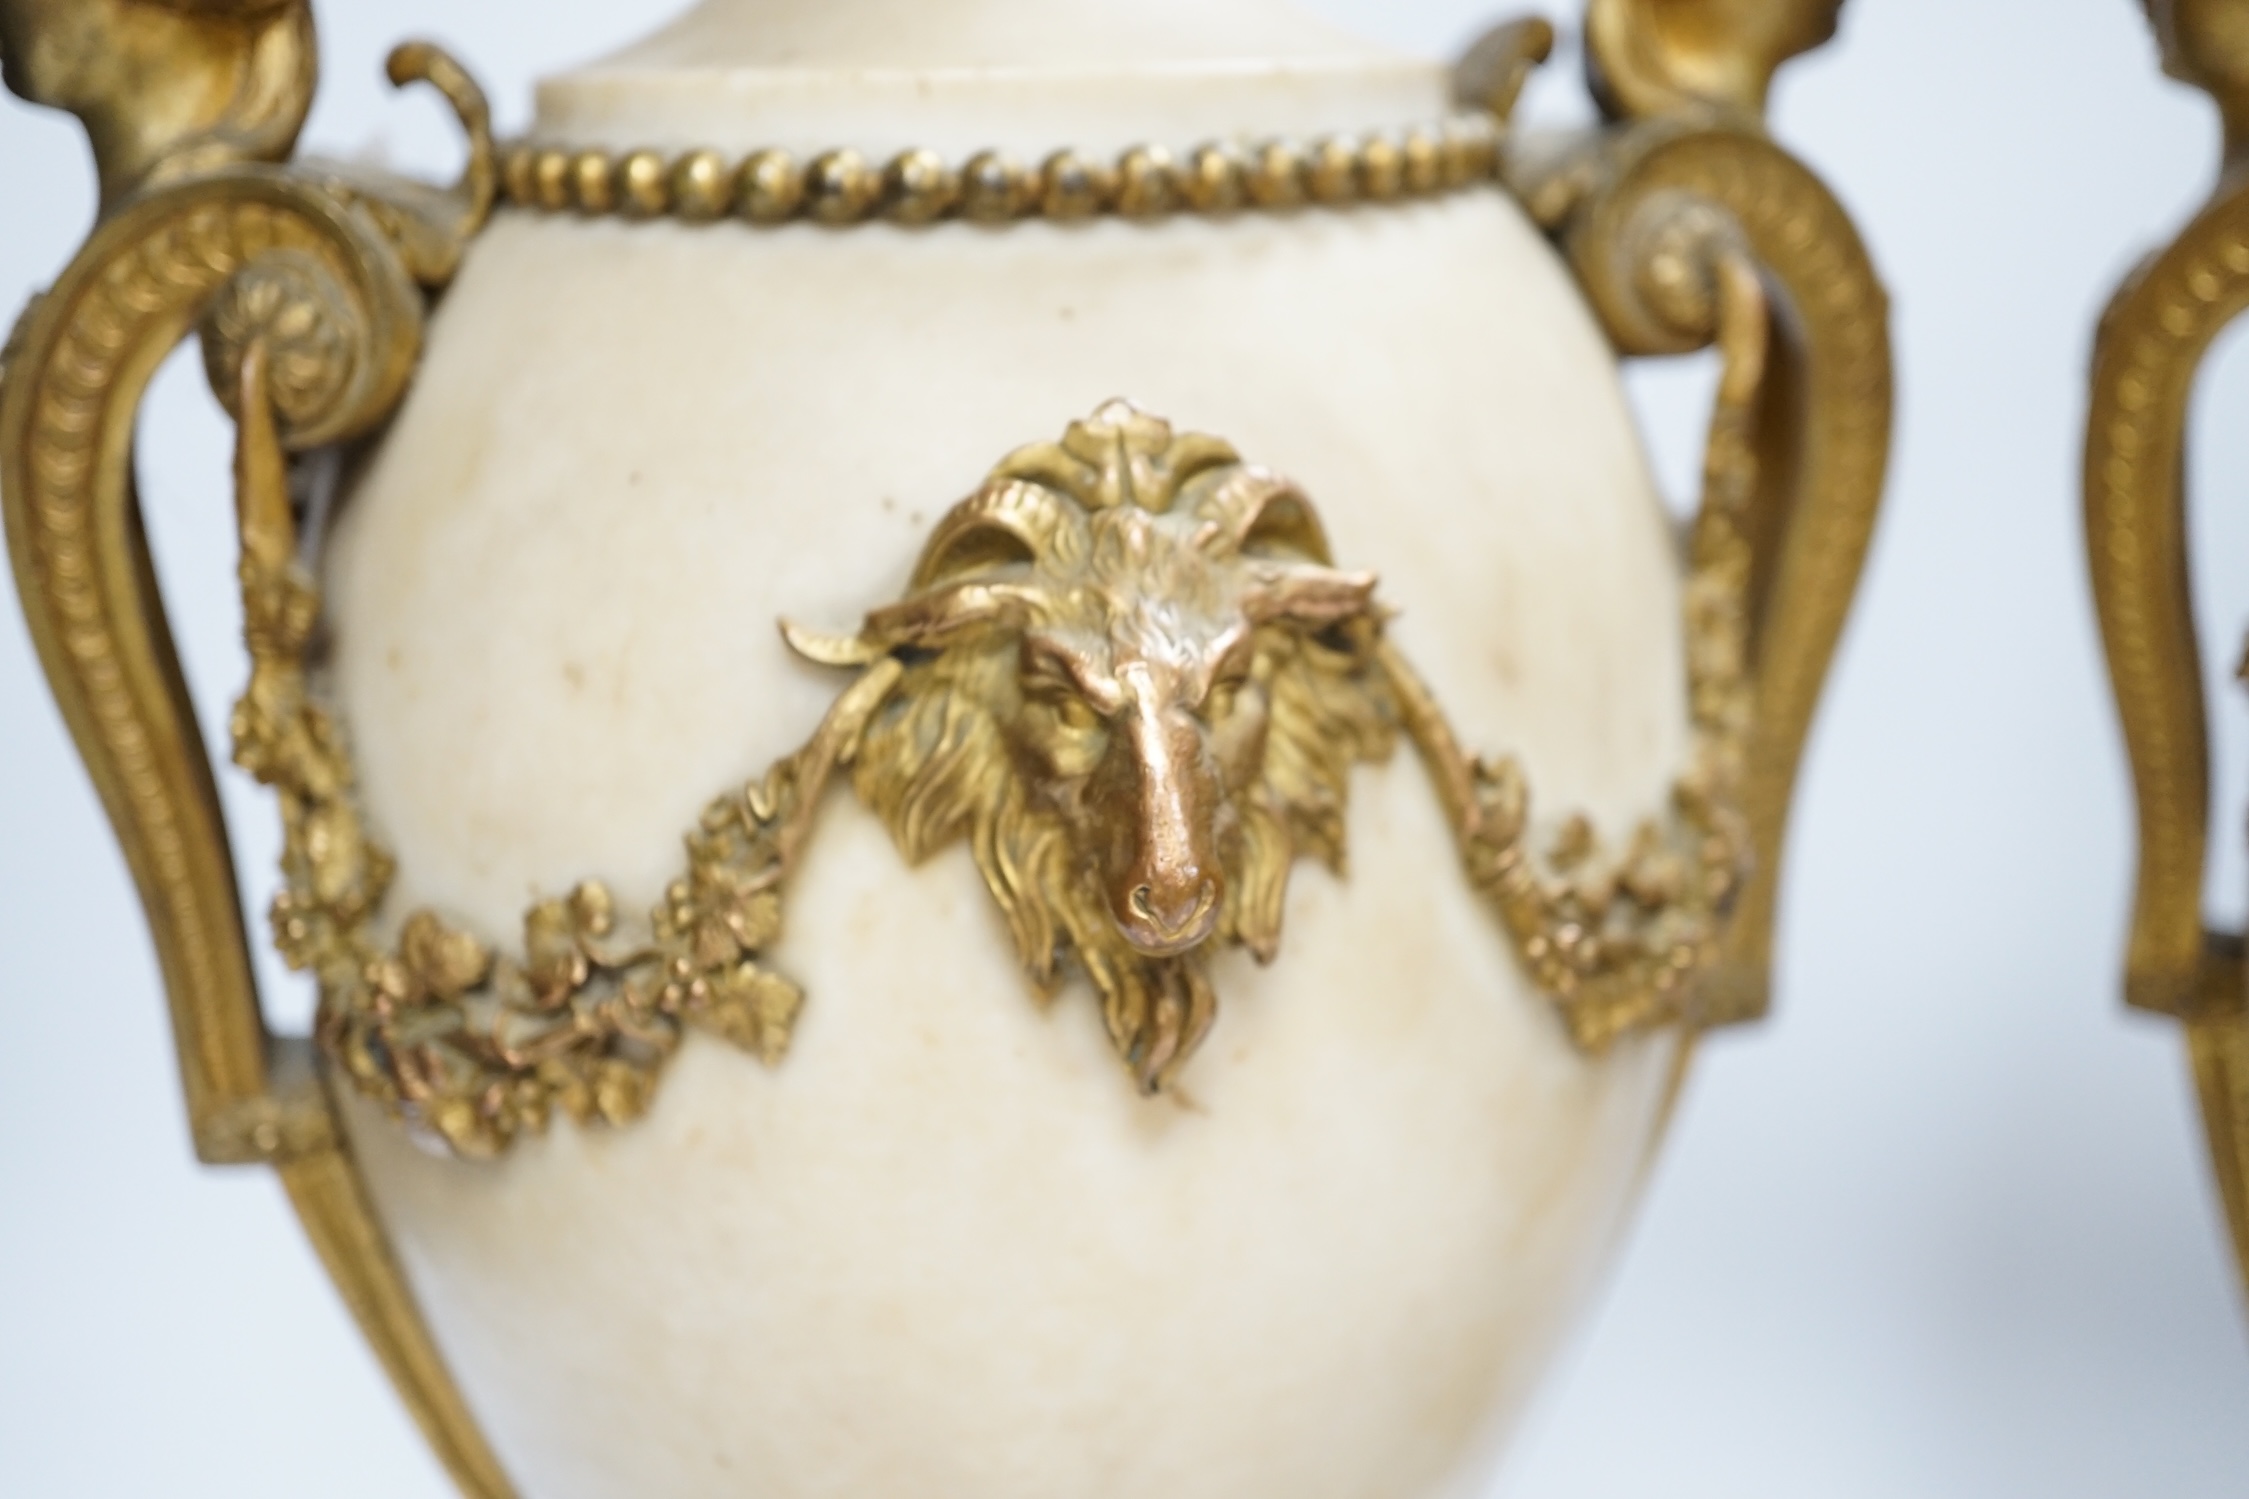 A pair of Adam style gilt metal mounted alabaster urns, 42cm high